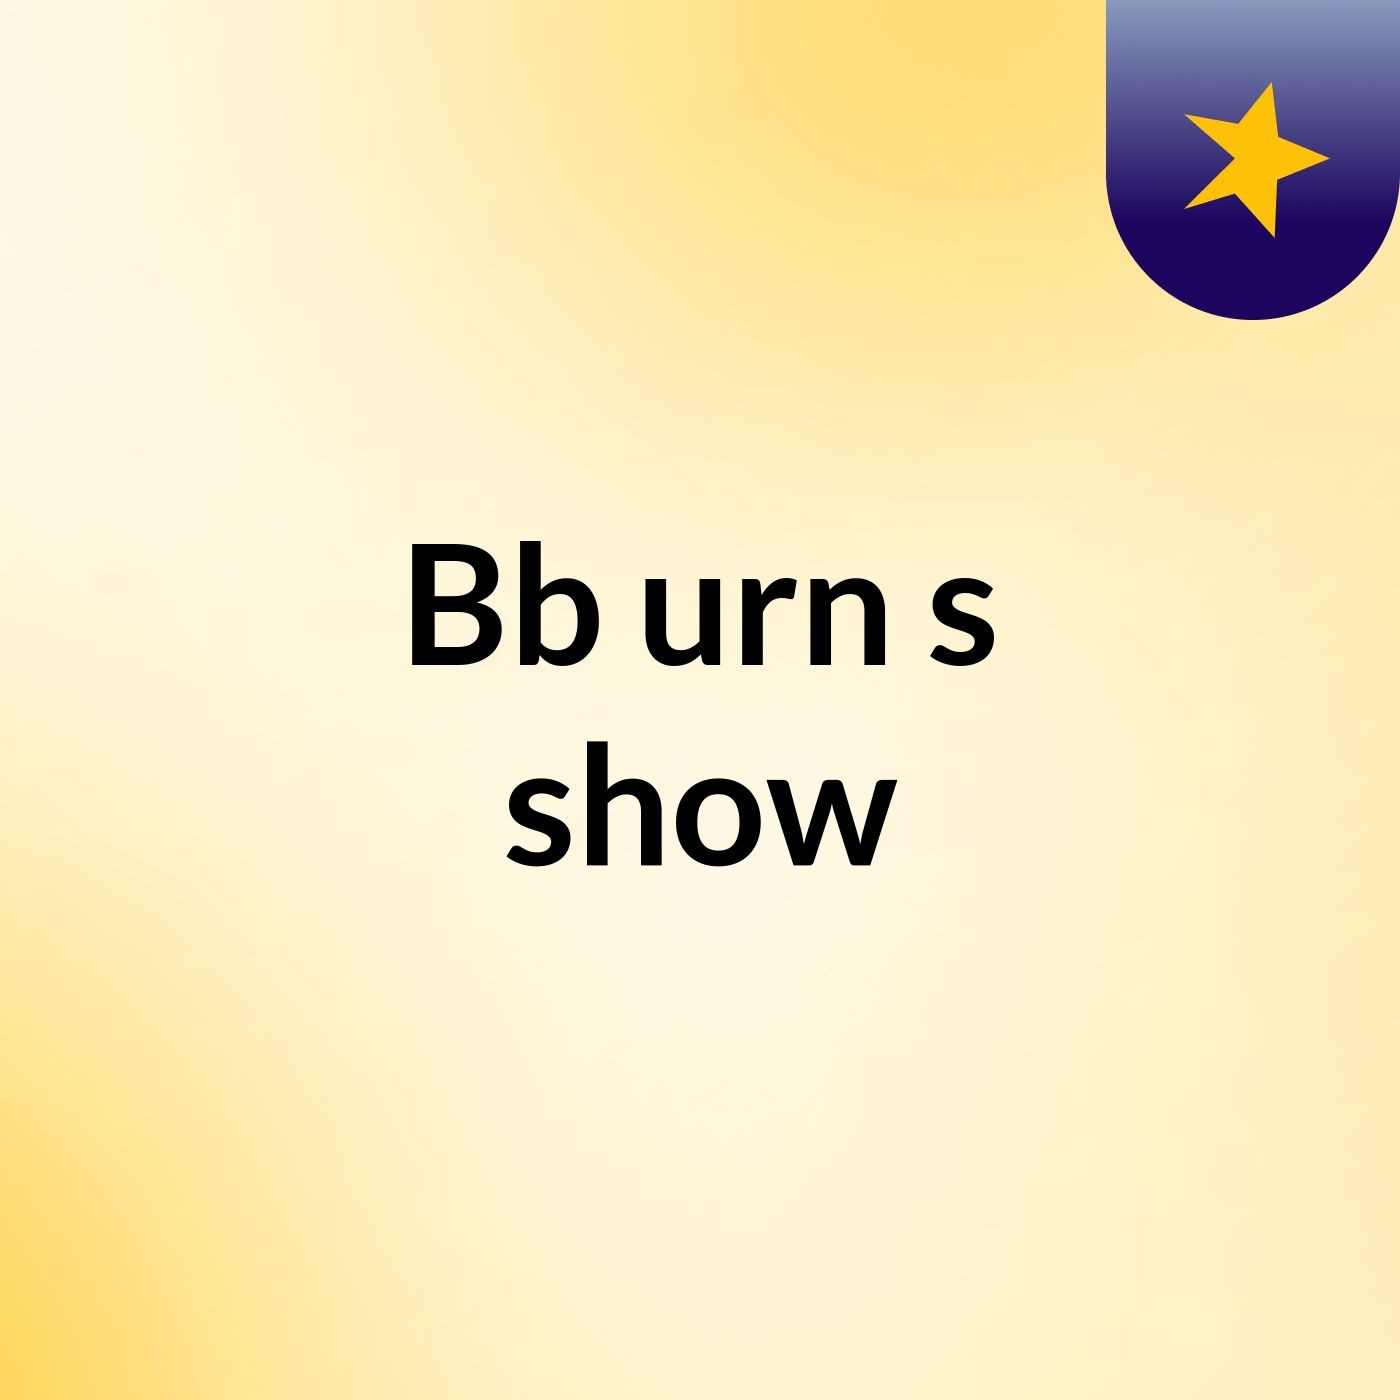 Bb urn's show